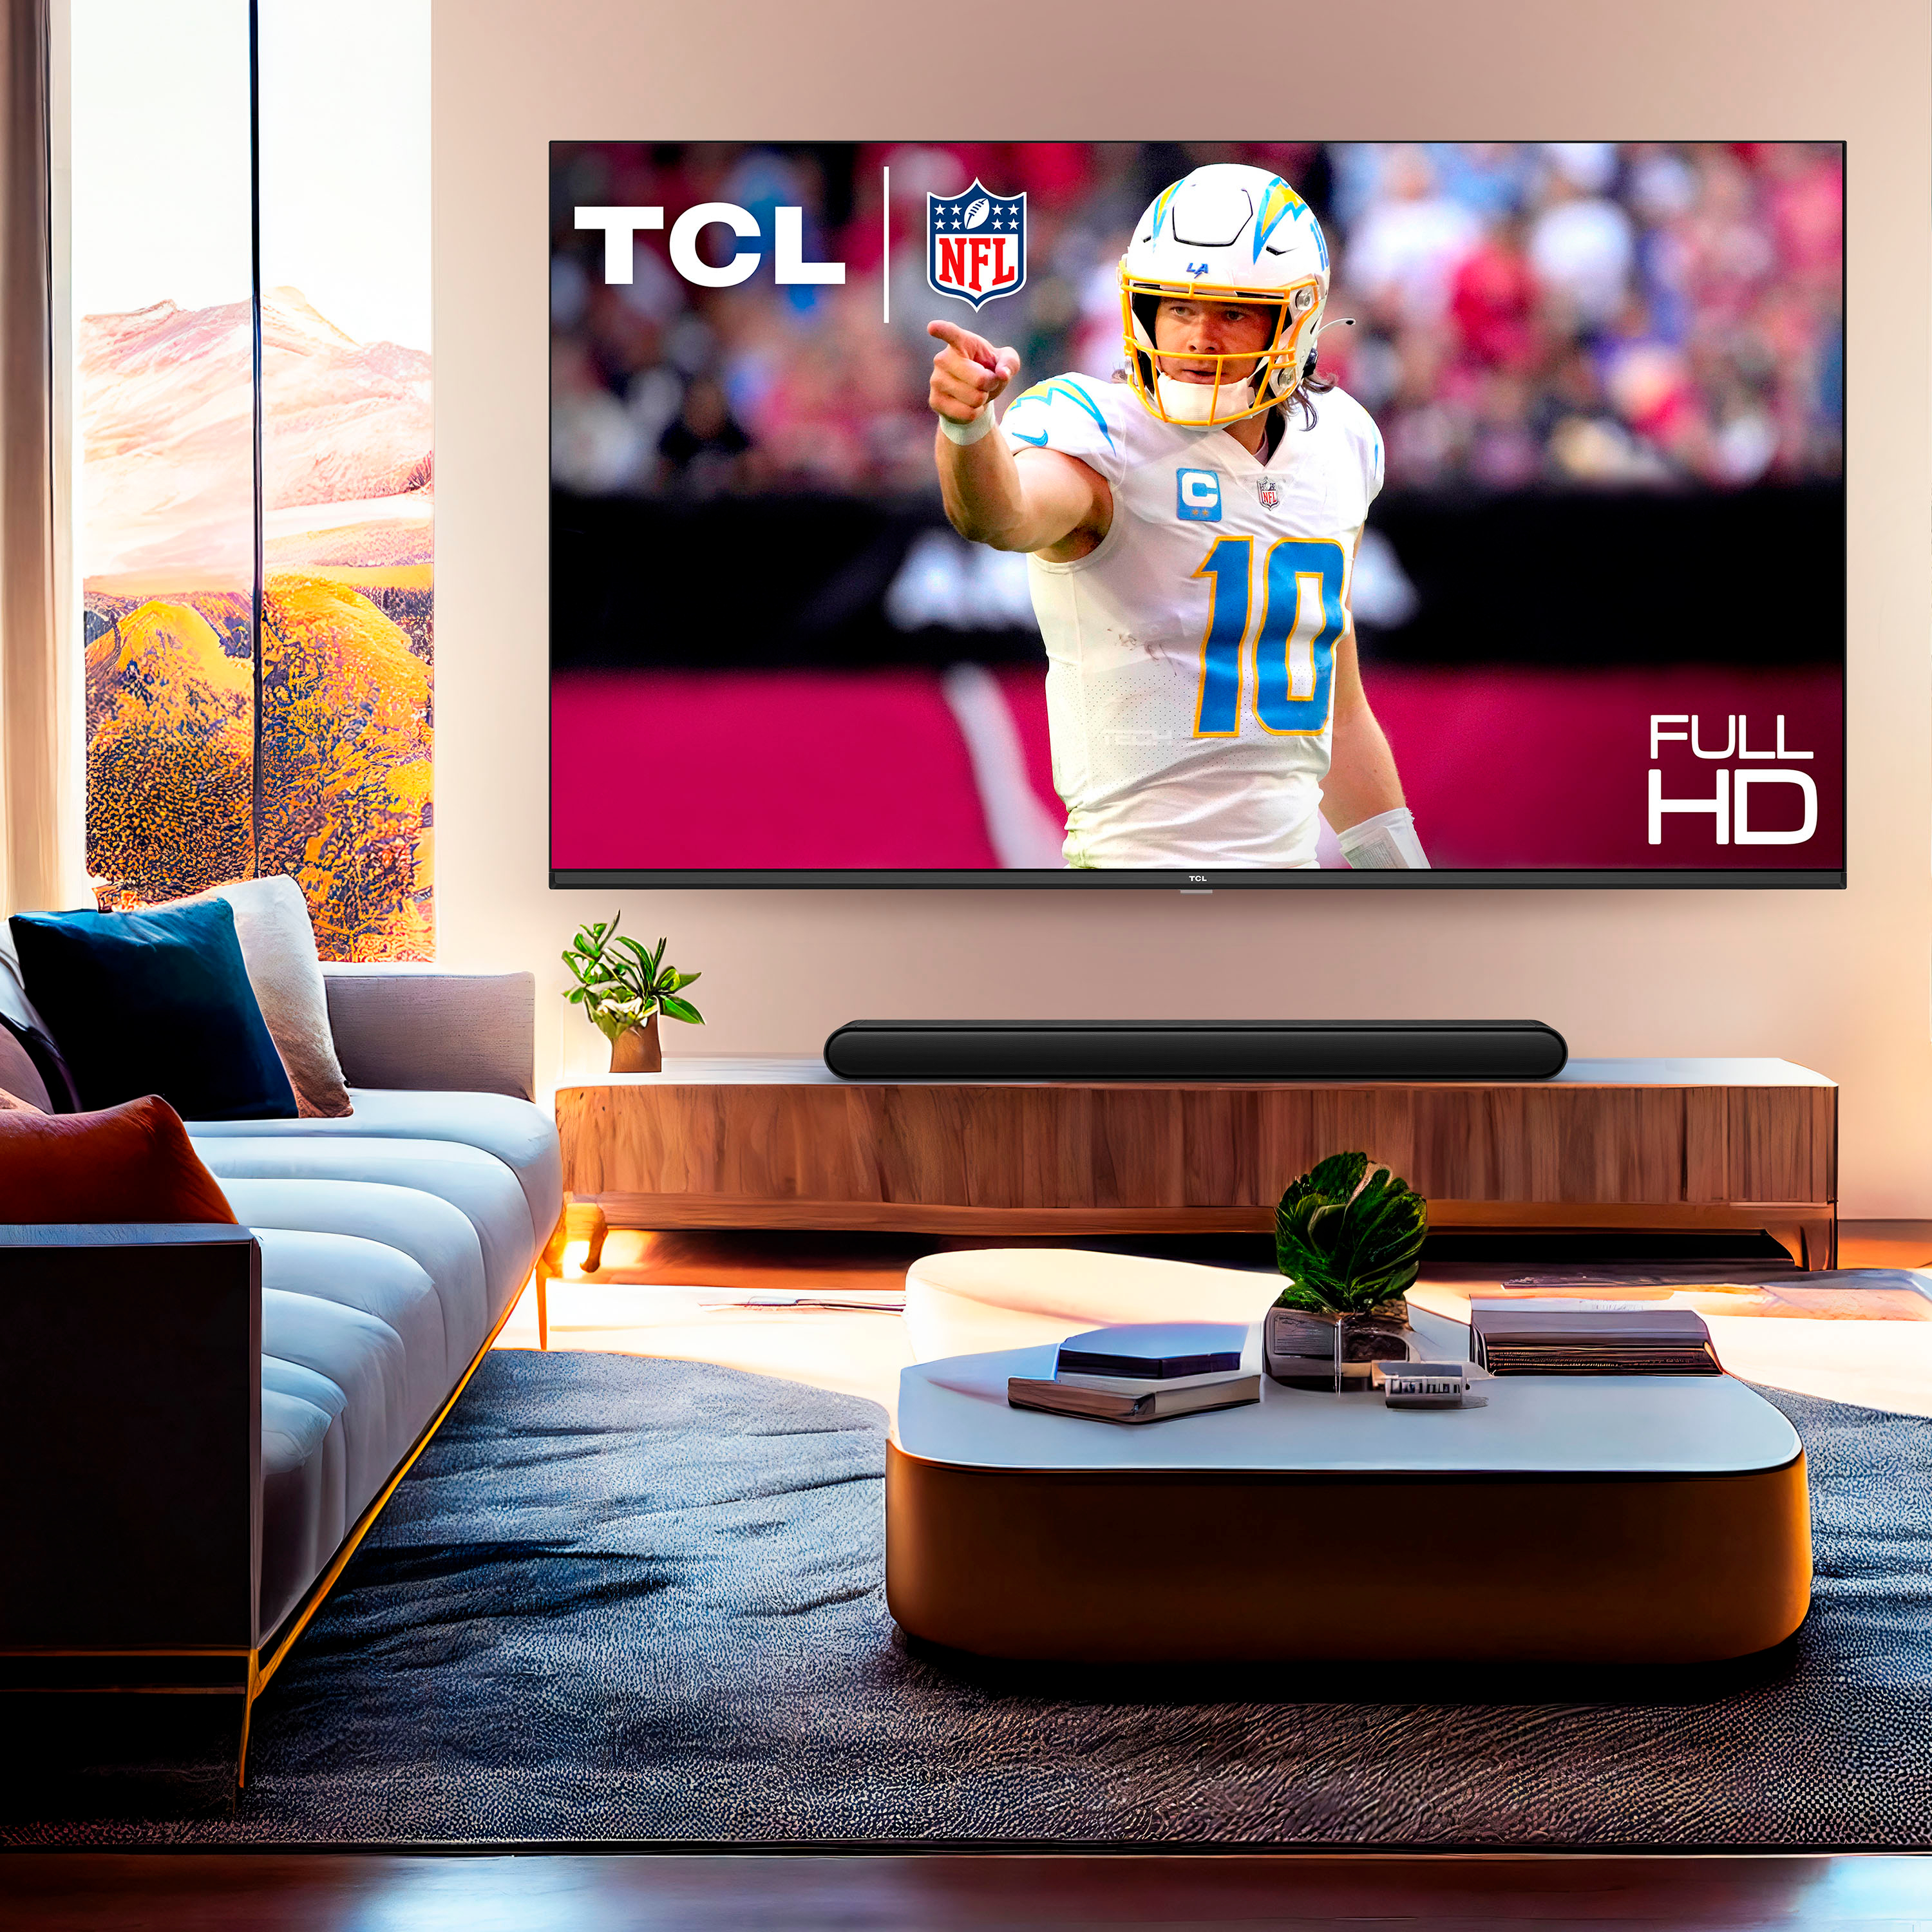 TCL 43 Class S Class 1080p FHD LED Smart TV with Roku TV